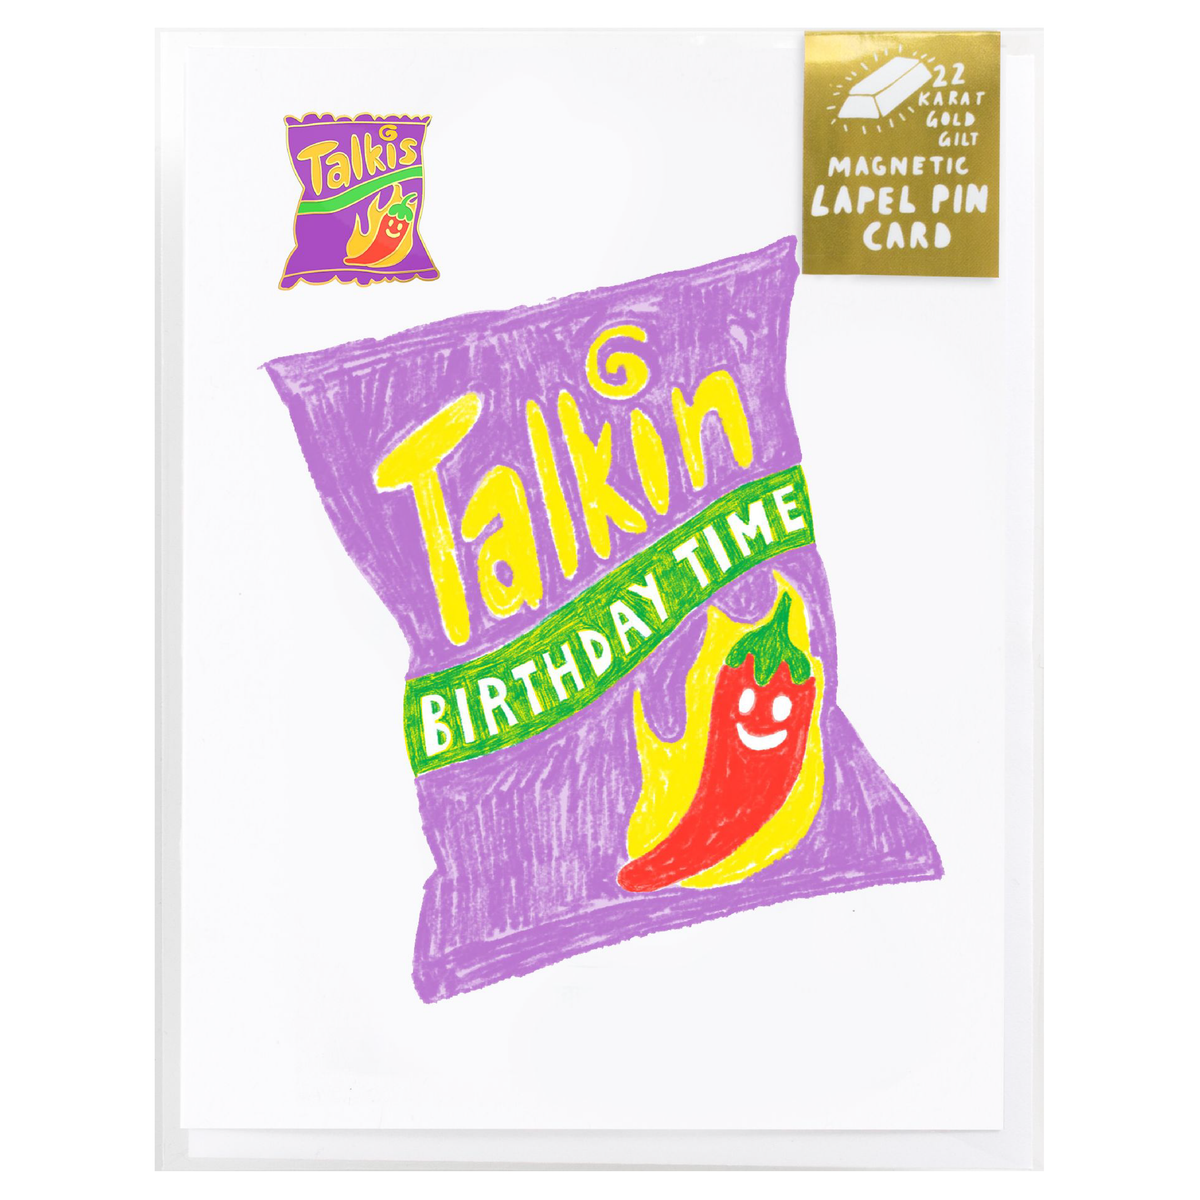 Talkis Birthday Time - Lapel Pin Card